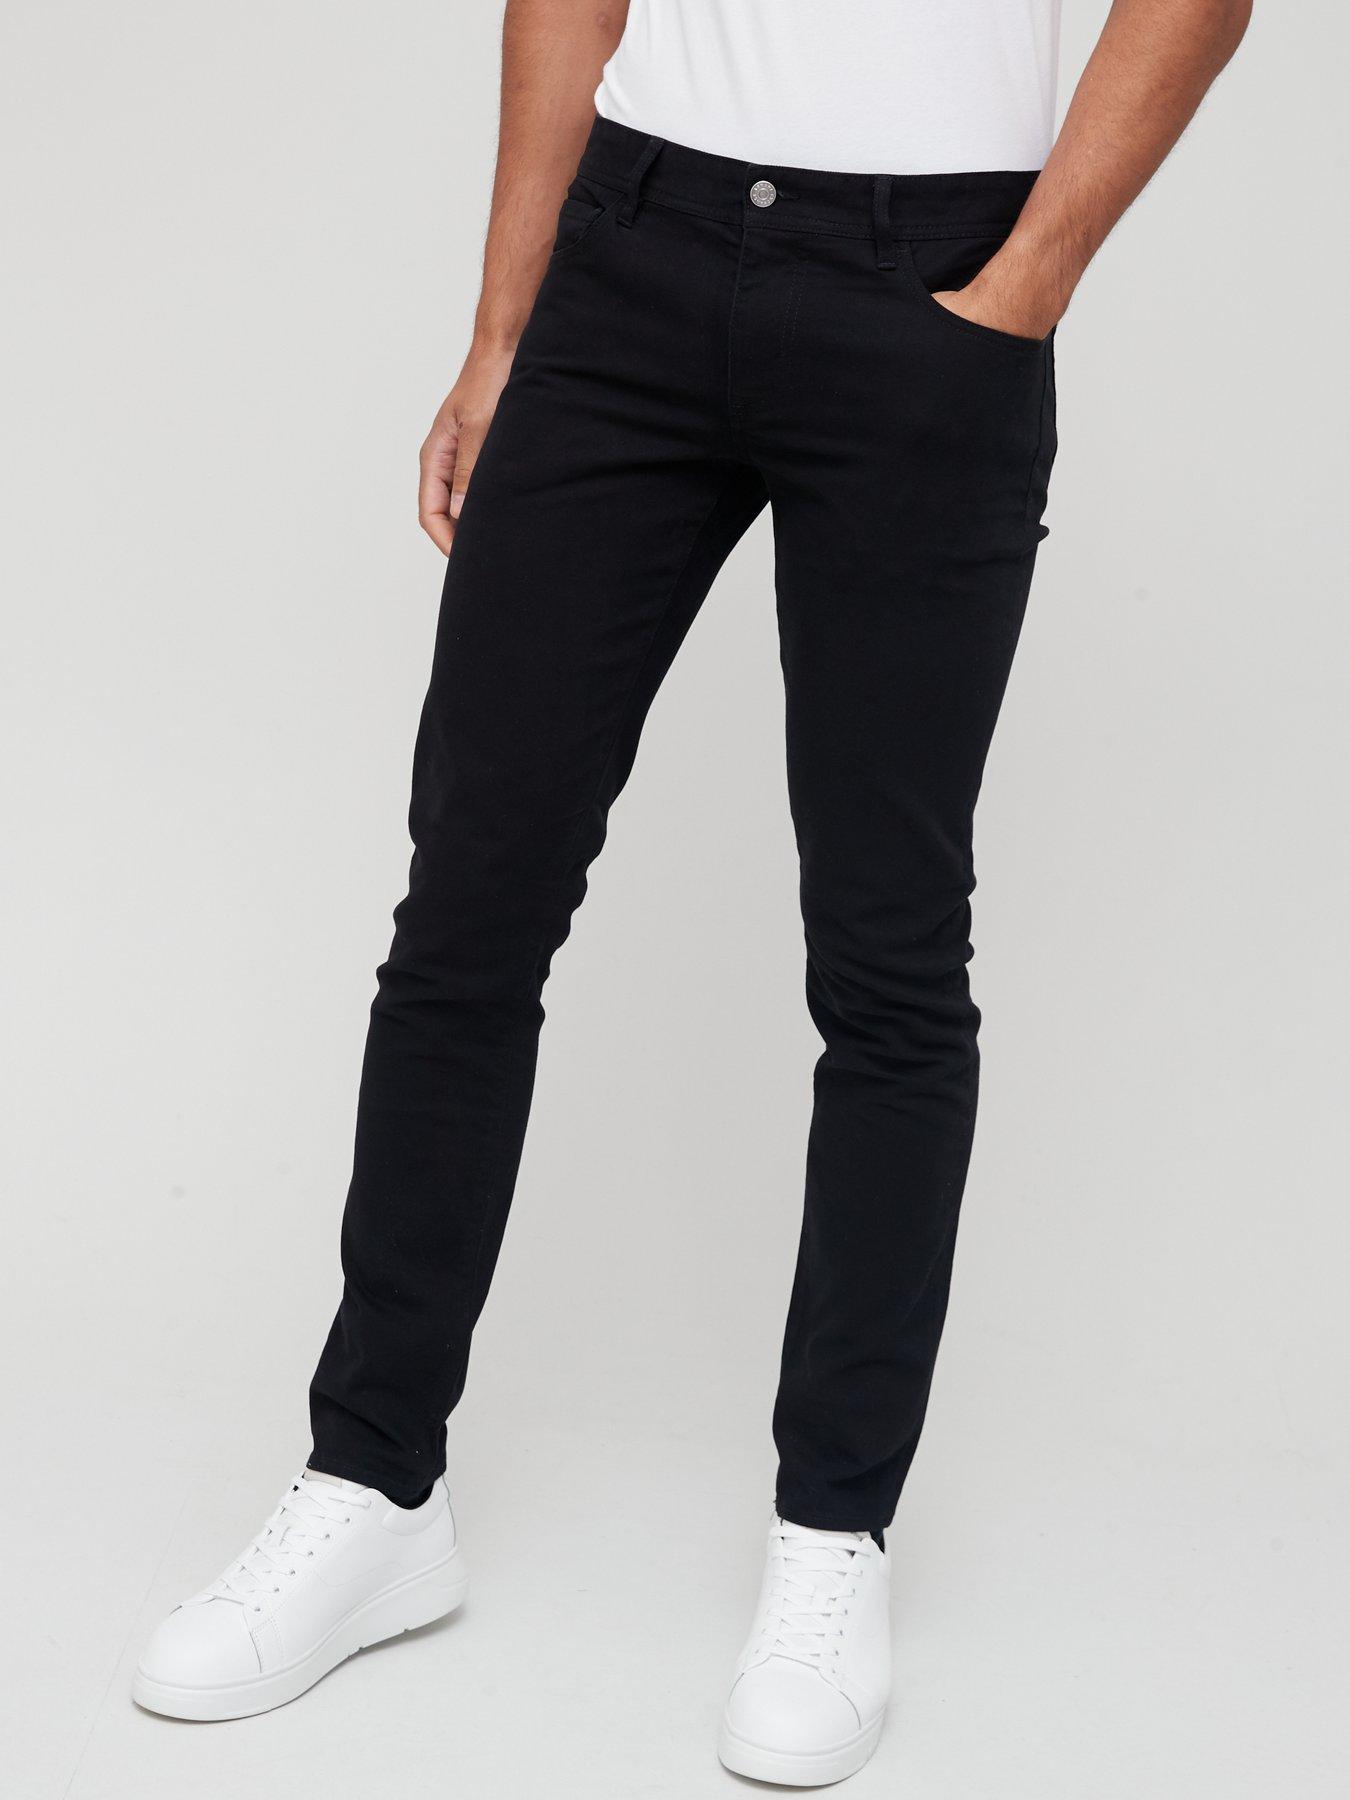 Armani Exchange Denim J14 Skinny Jeans in Black for Men Mens Clothing Jeans Skinny jeans 